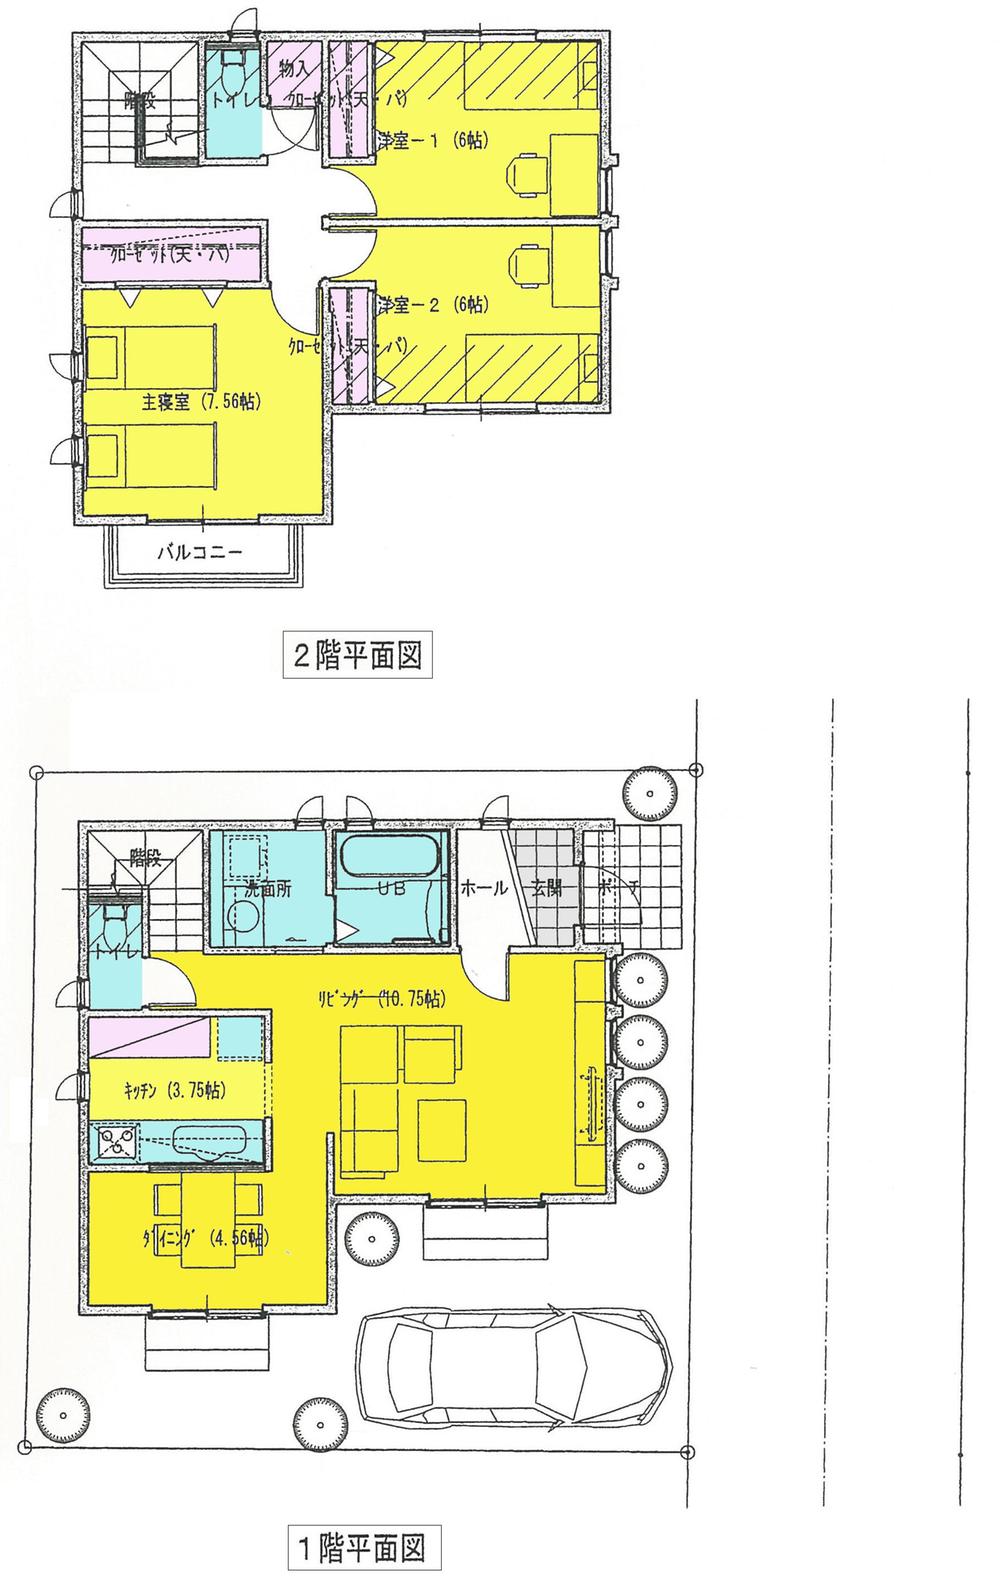 Building plan example (floor plan). Building plan Building price 2,479.5 yen, Building area 95.42 sq m